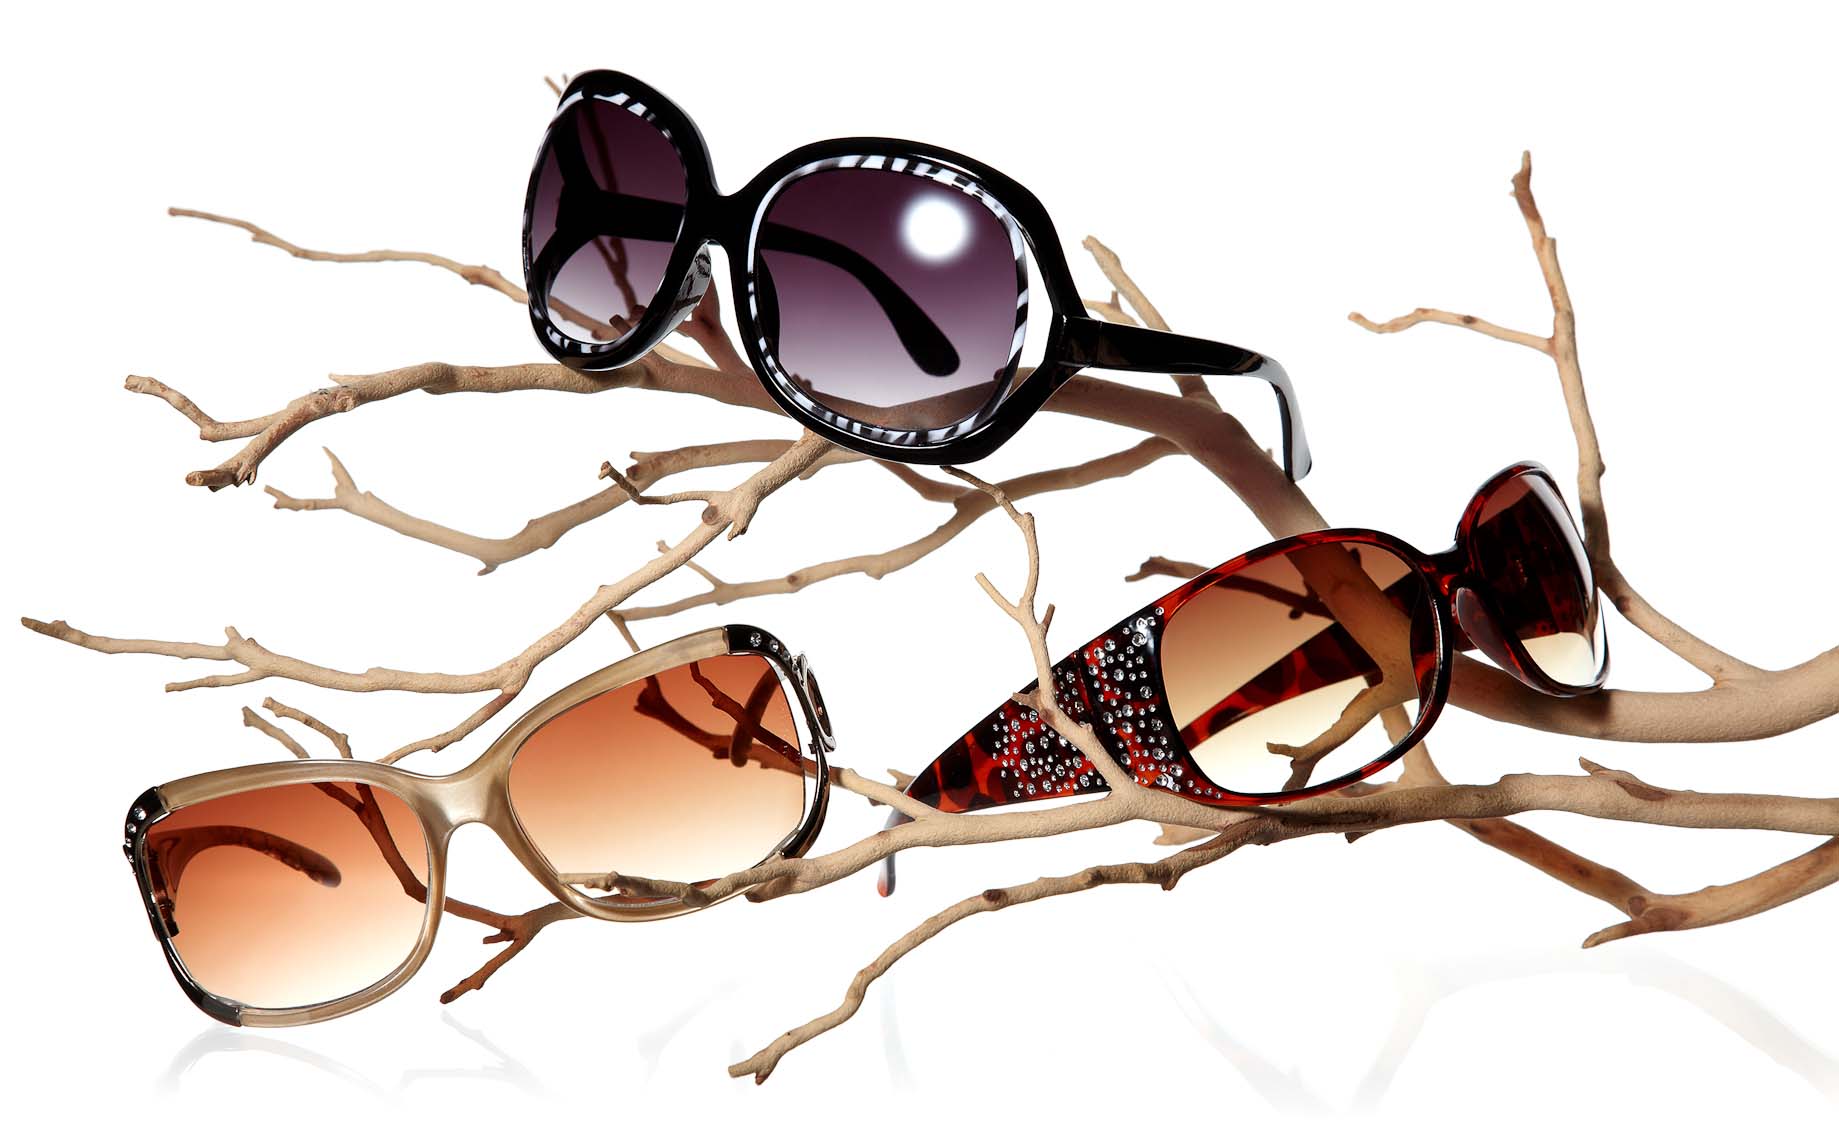 sunglasses product photography on white background